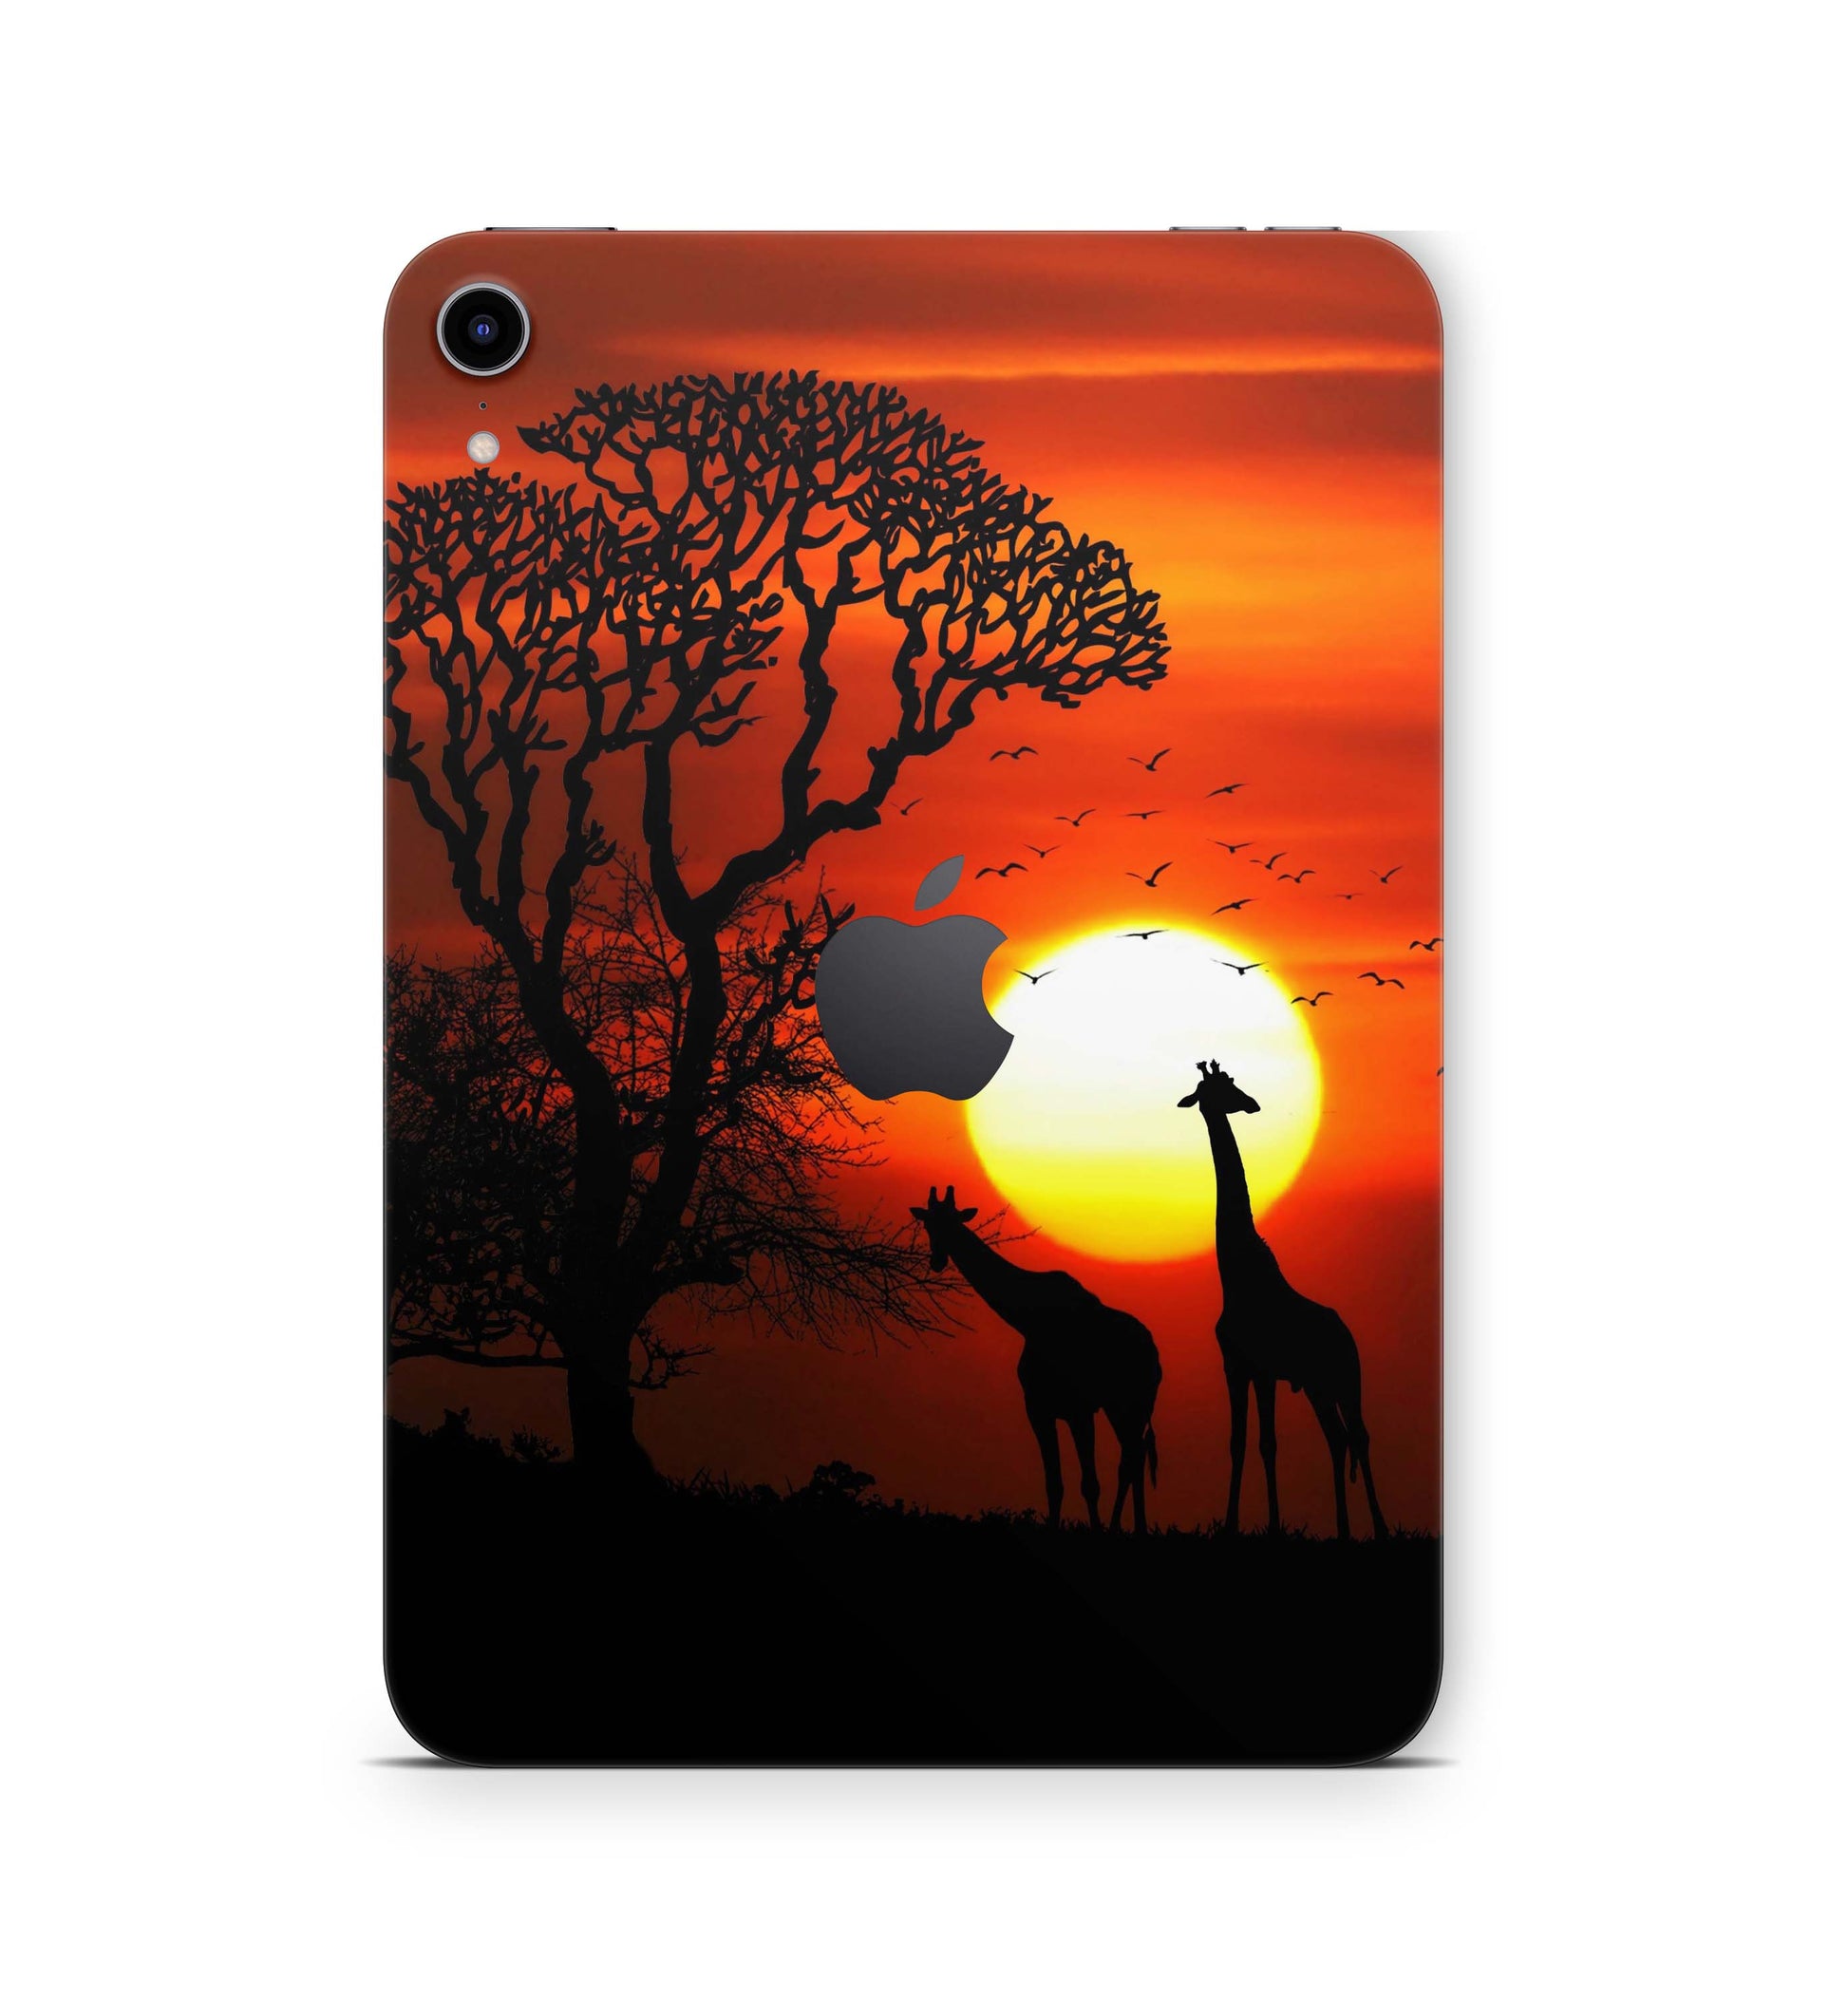 Apple iPad Skin Design Cover Folie Vinyl Skins & Wraps für alle iPad Modelle Aufkleber Skins4u Afrika  